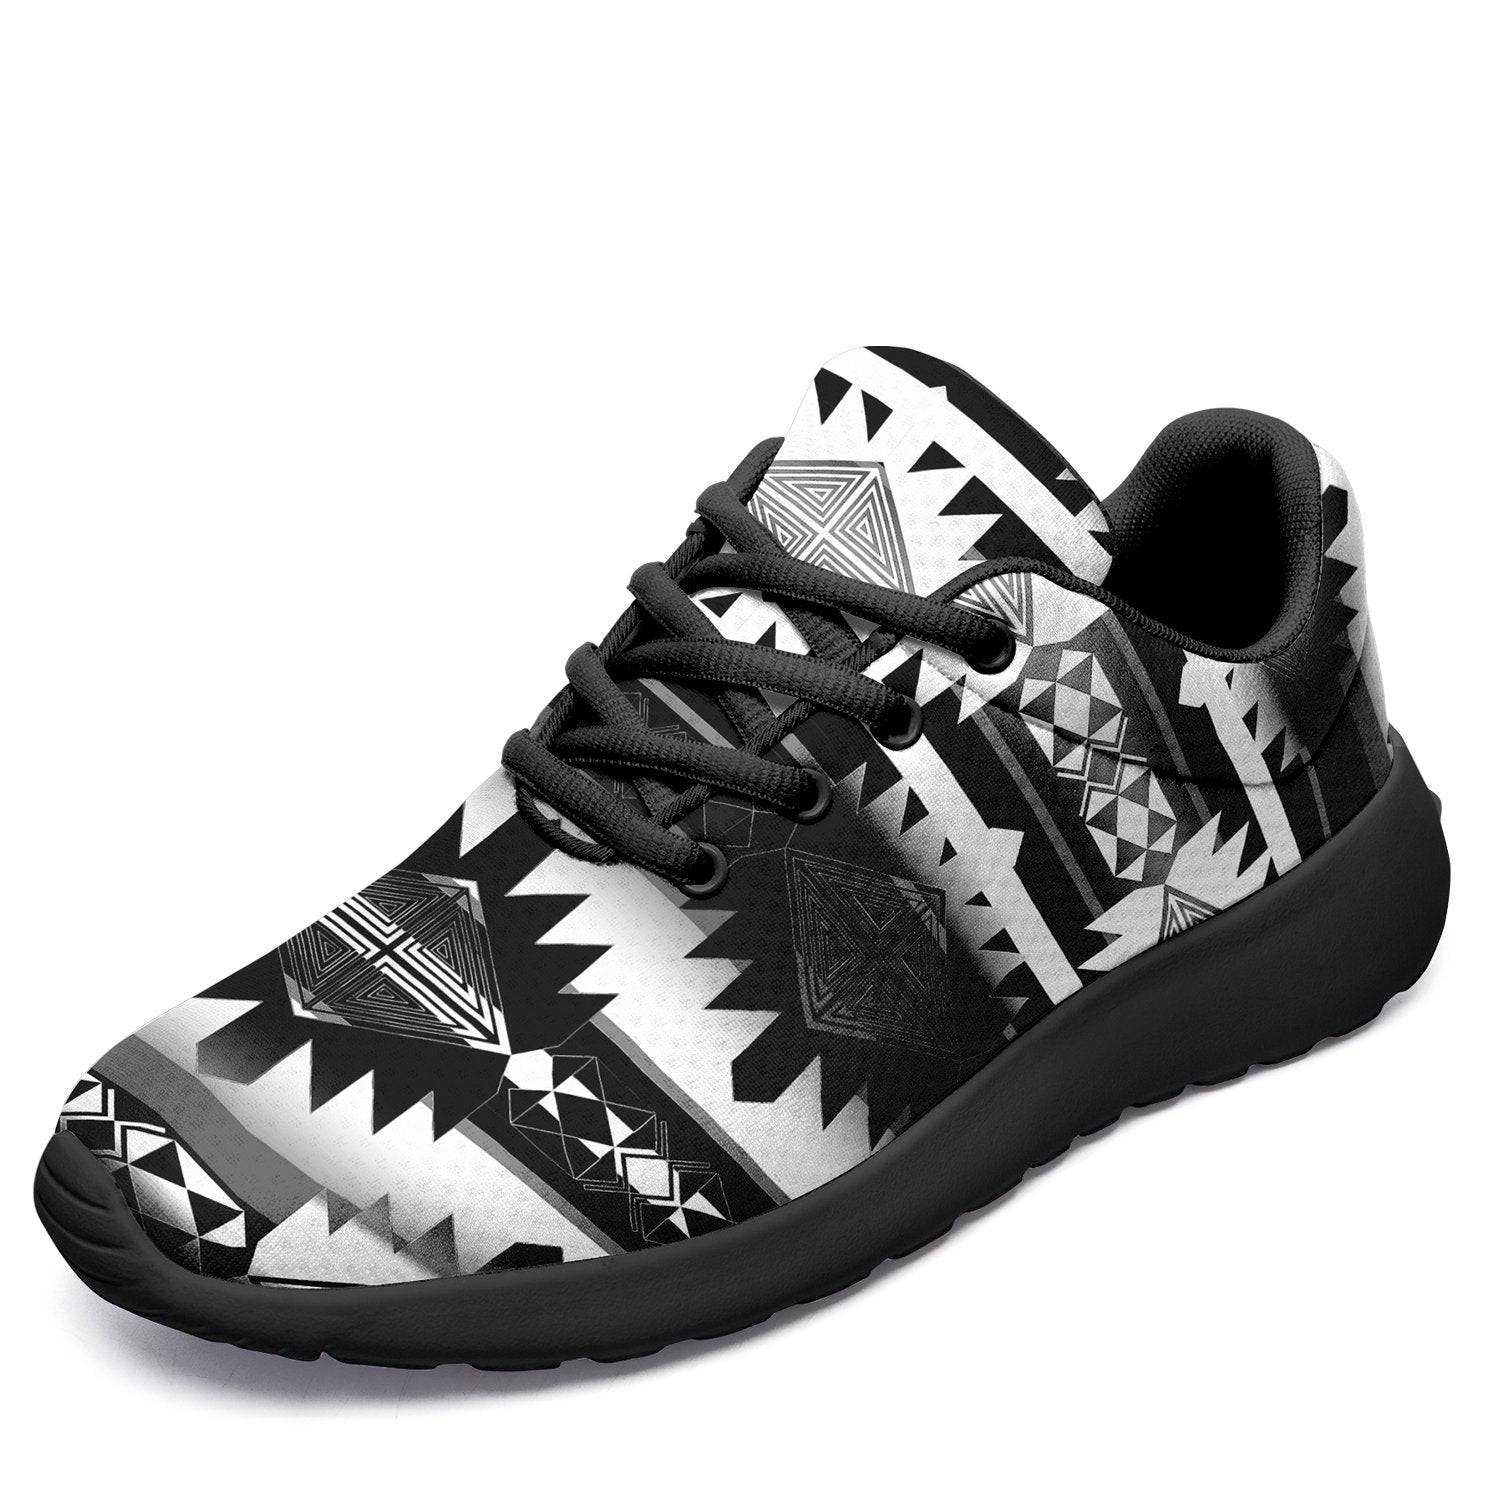 Okotoks Black and White Ikkaayi Sport Sneakers 49 Dzine US Women 4.5 / US Youth 3.5 / EUR 35 Black Sole 